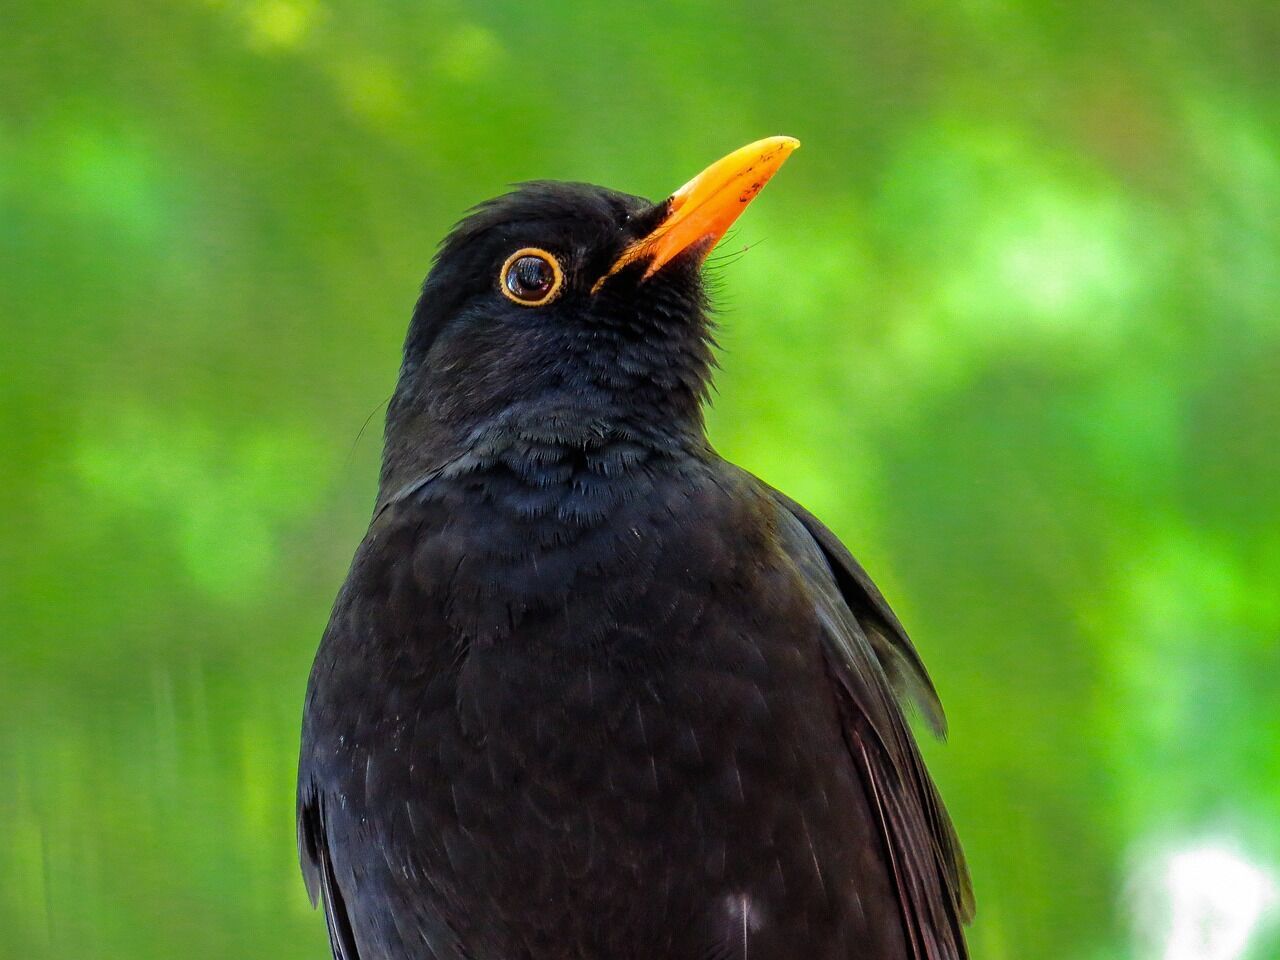 Blackbird – thoughts on him